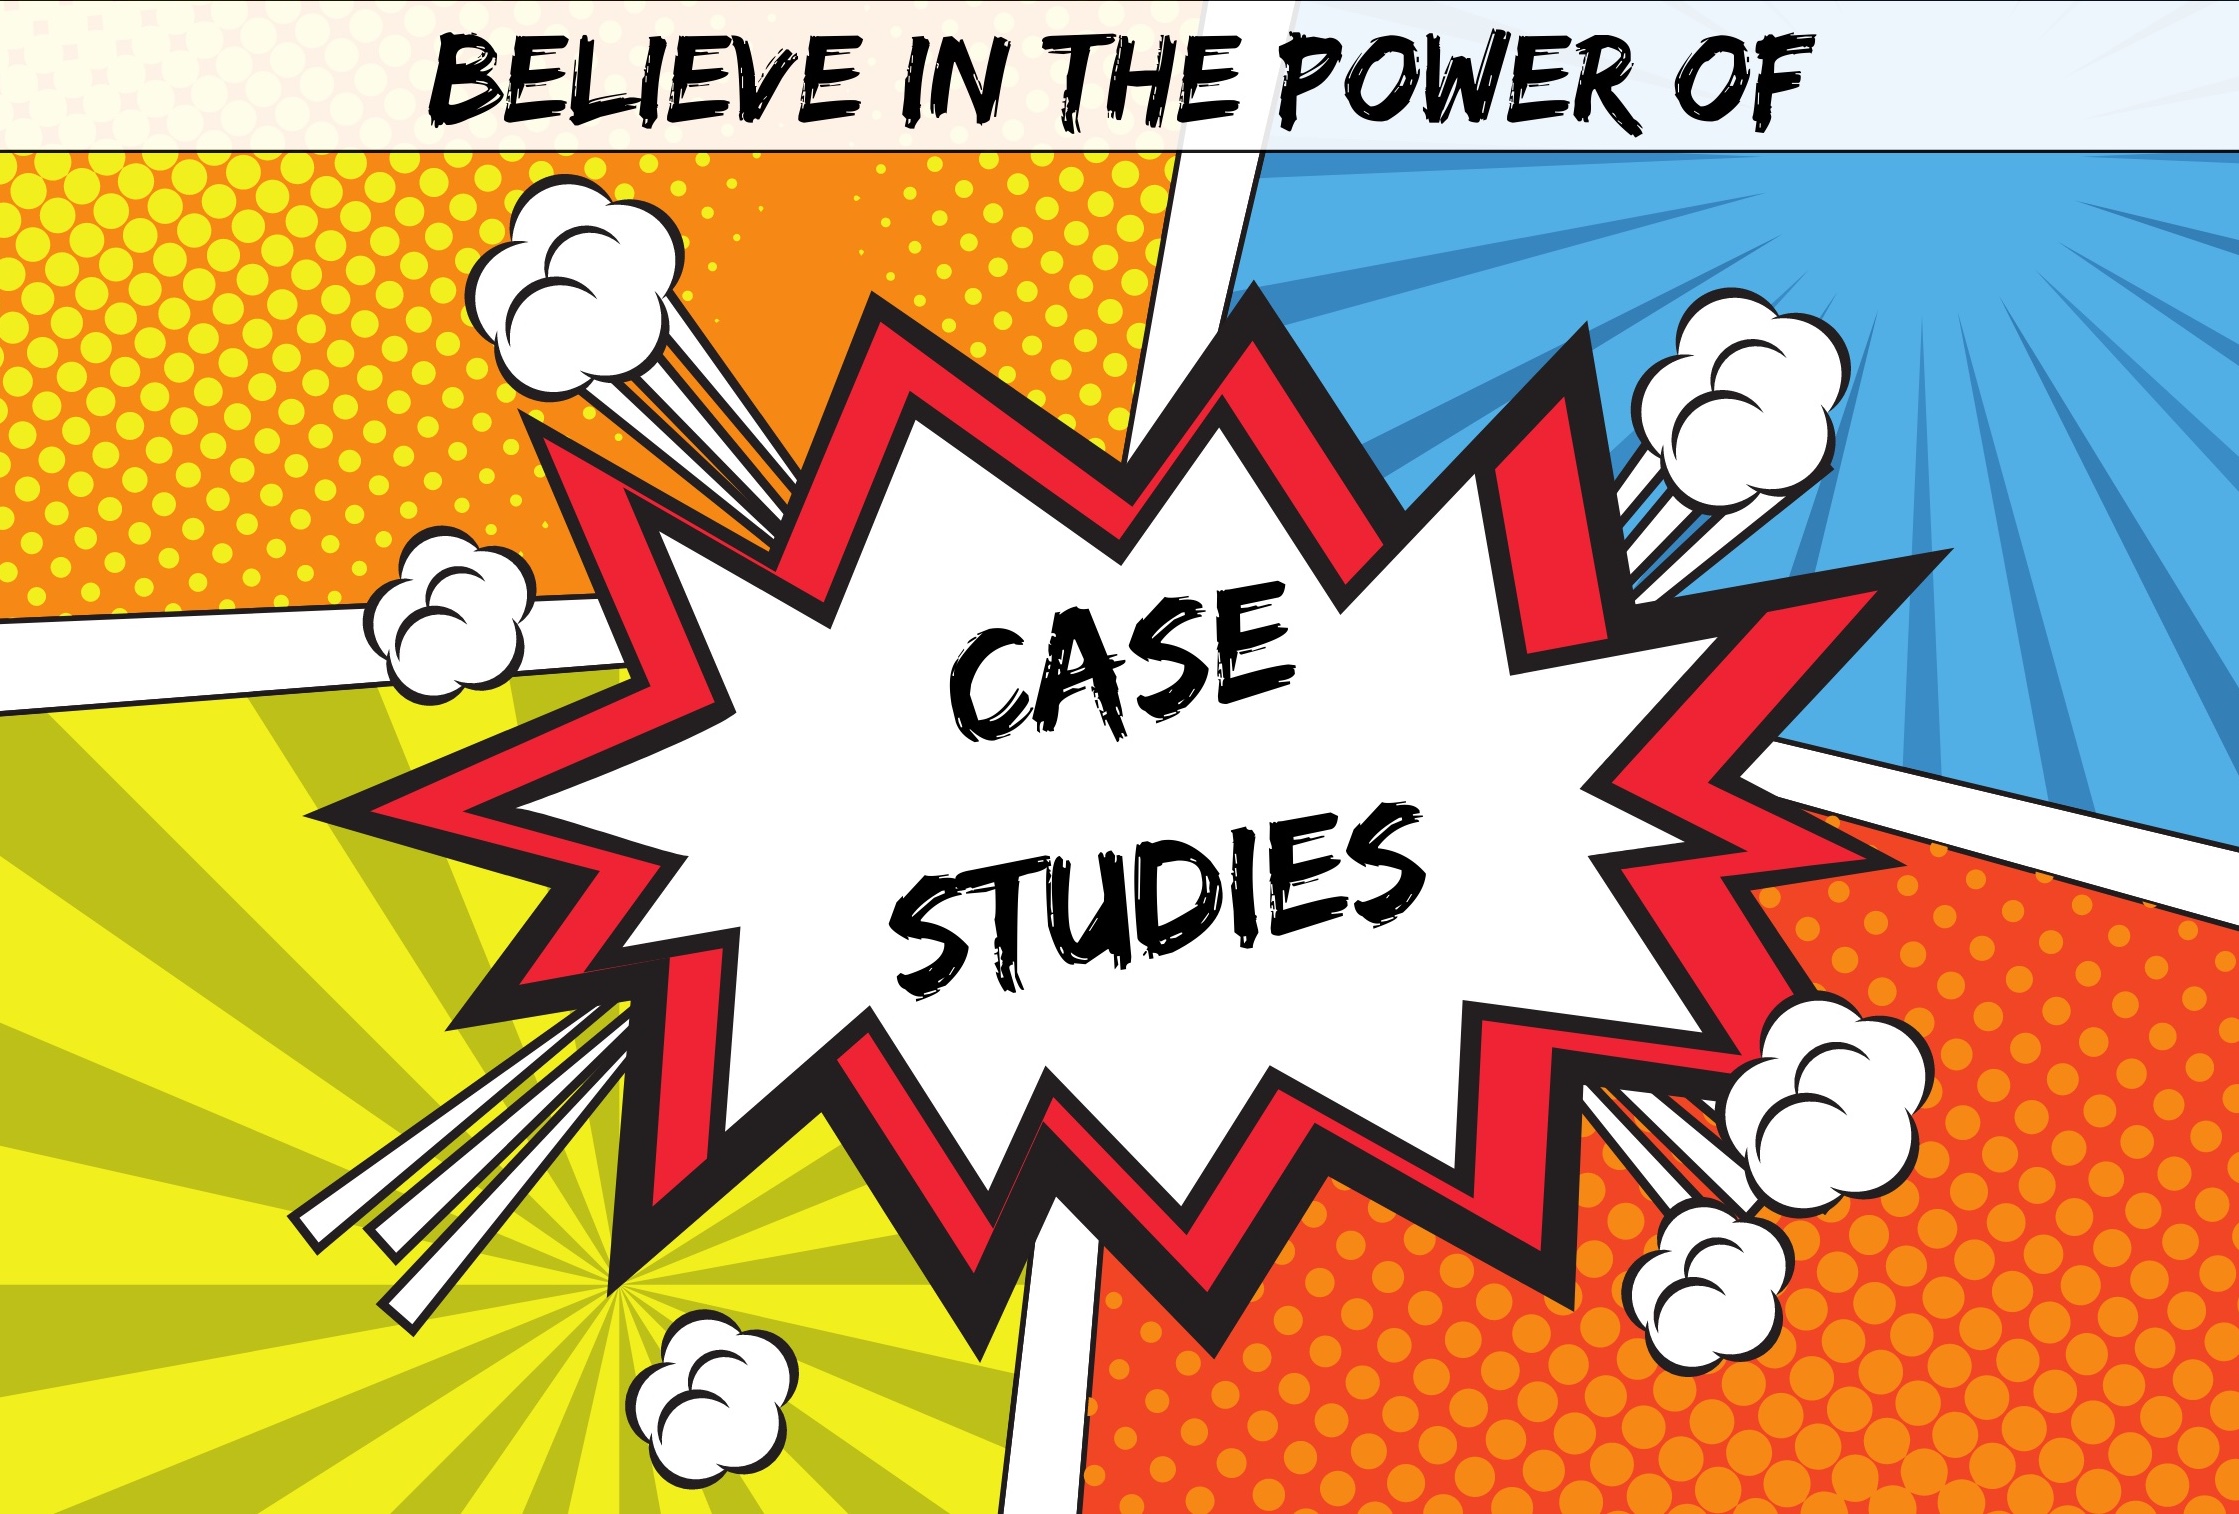 Believe in the power of case studies